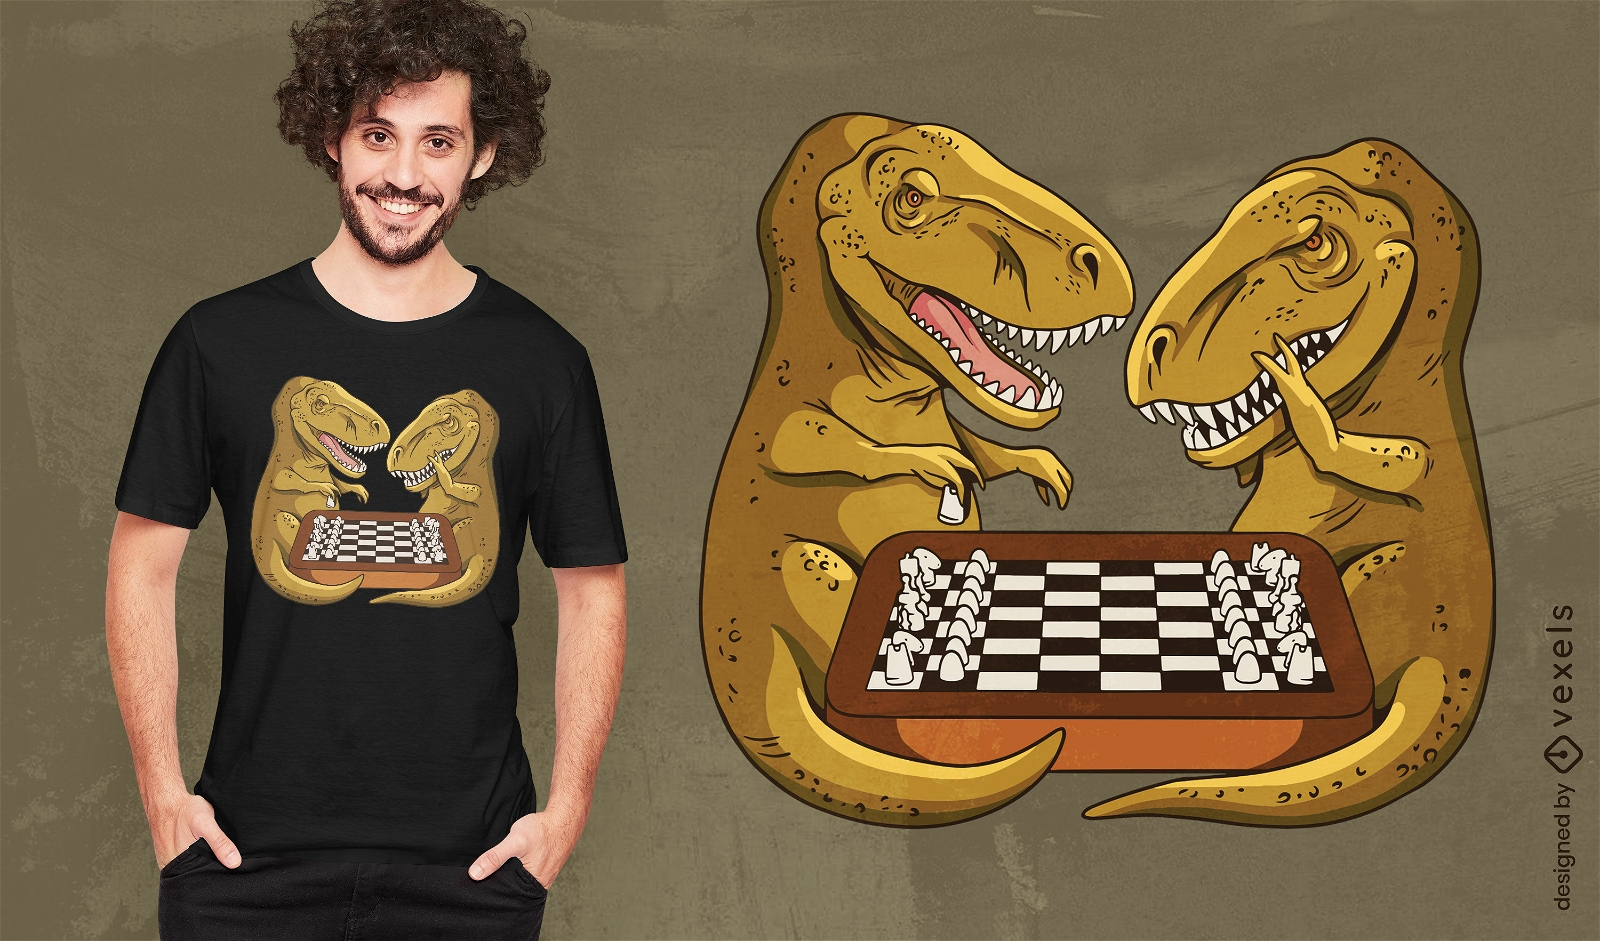 Dise?o de camiseta de dinosaurios T-rex jugando al ajedrez.